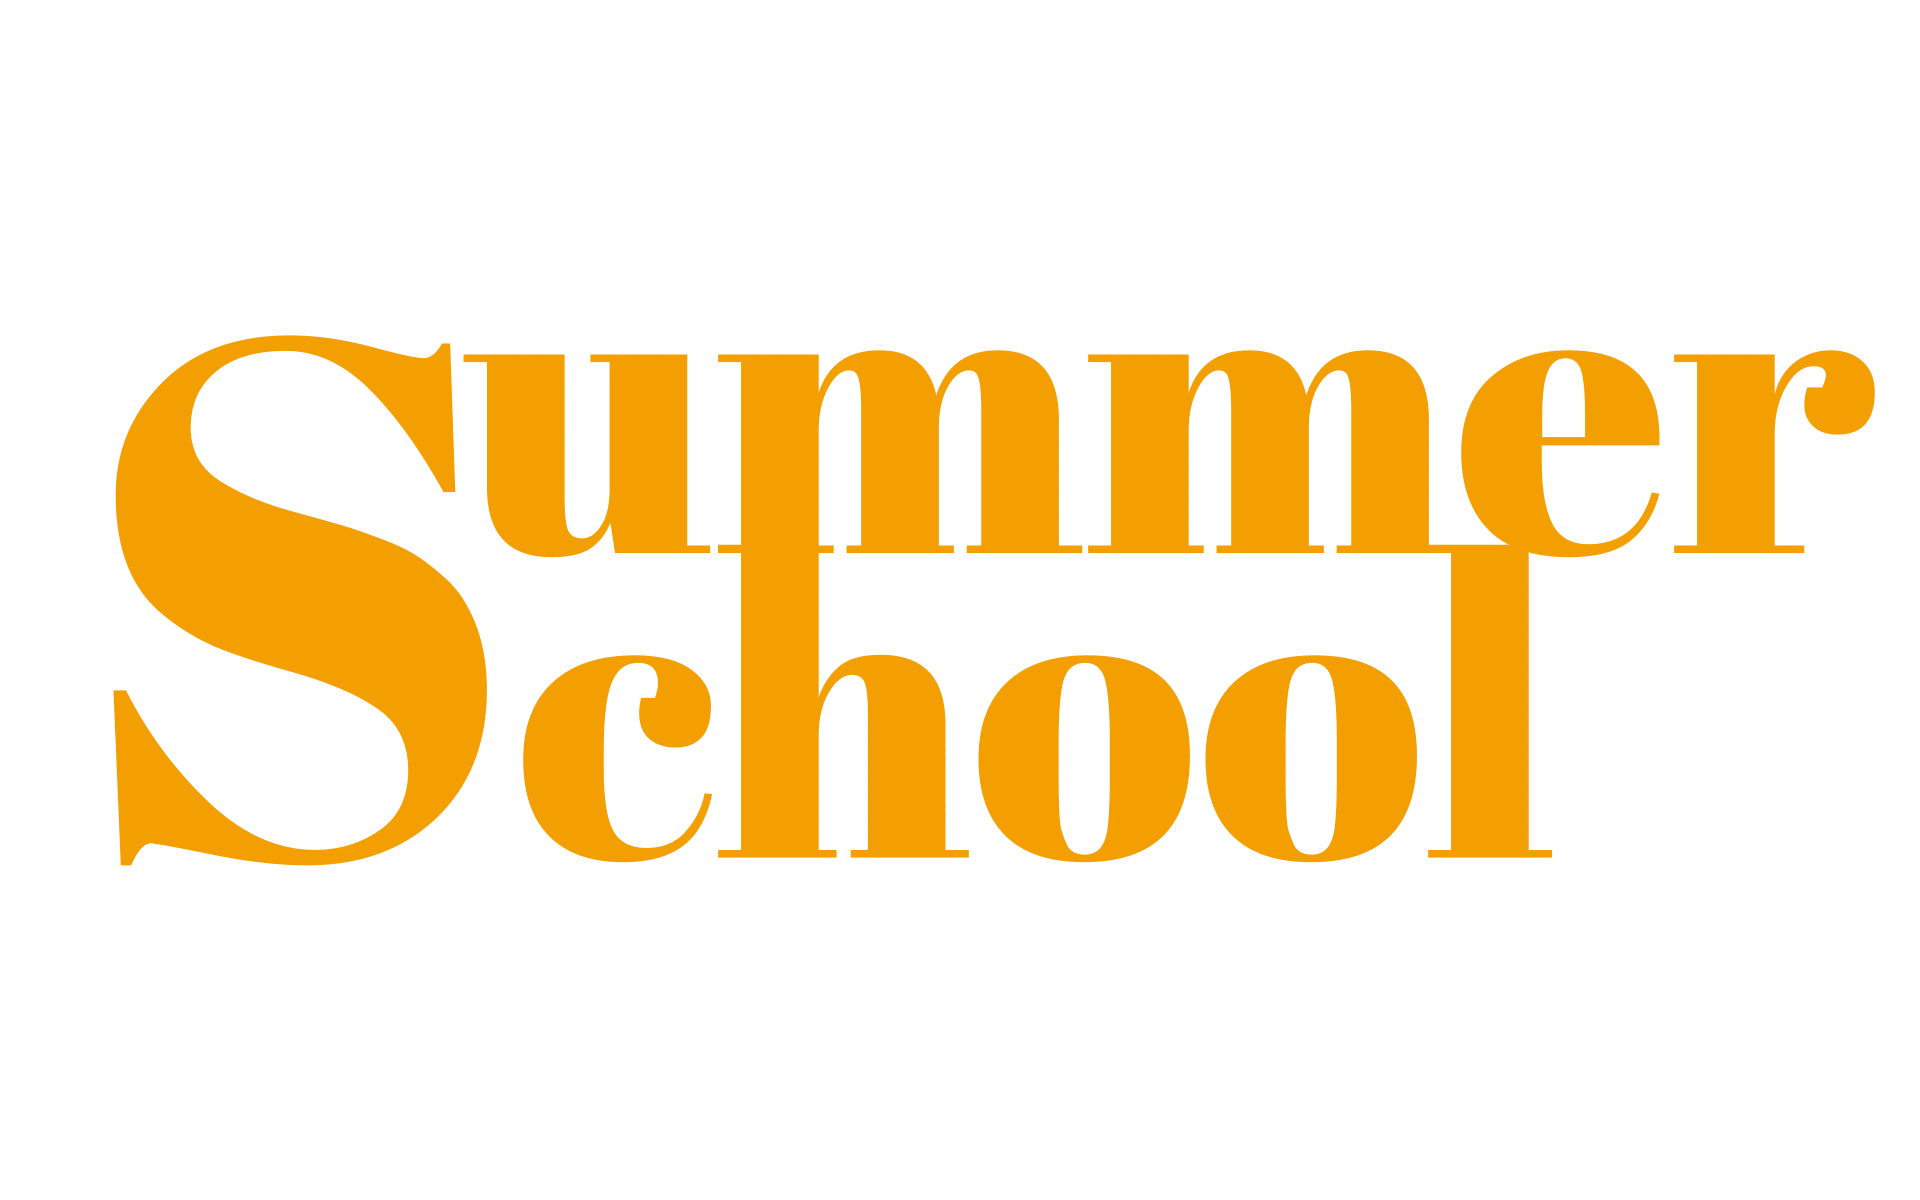 Every Summer School logo